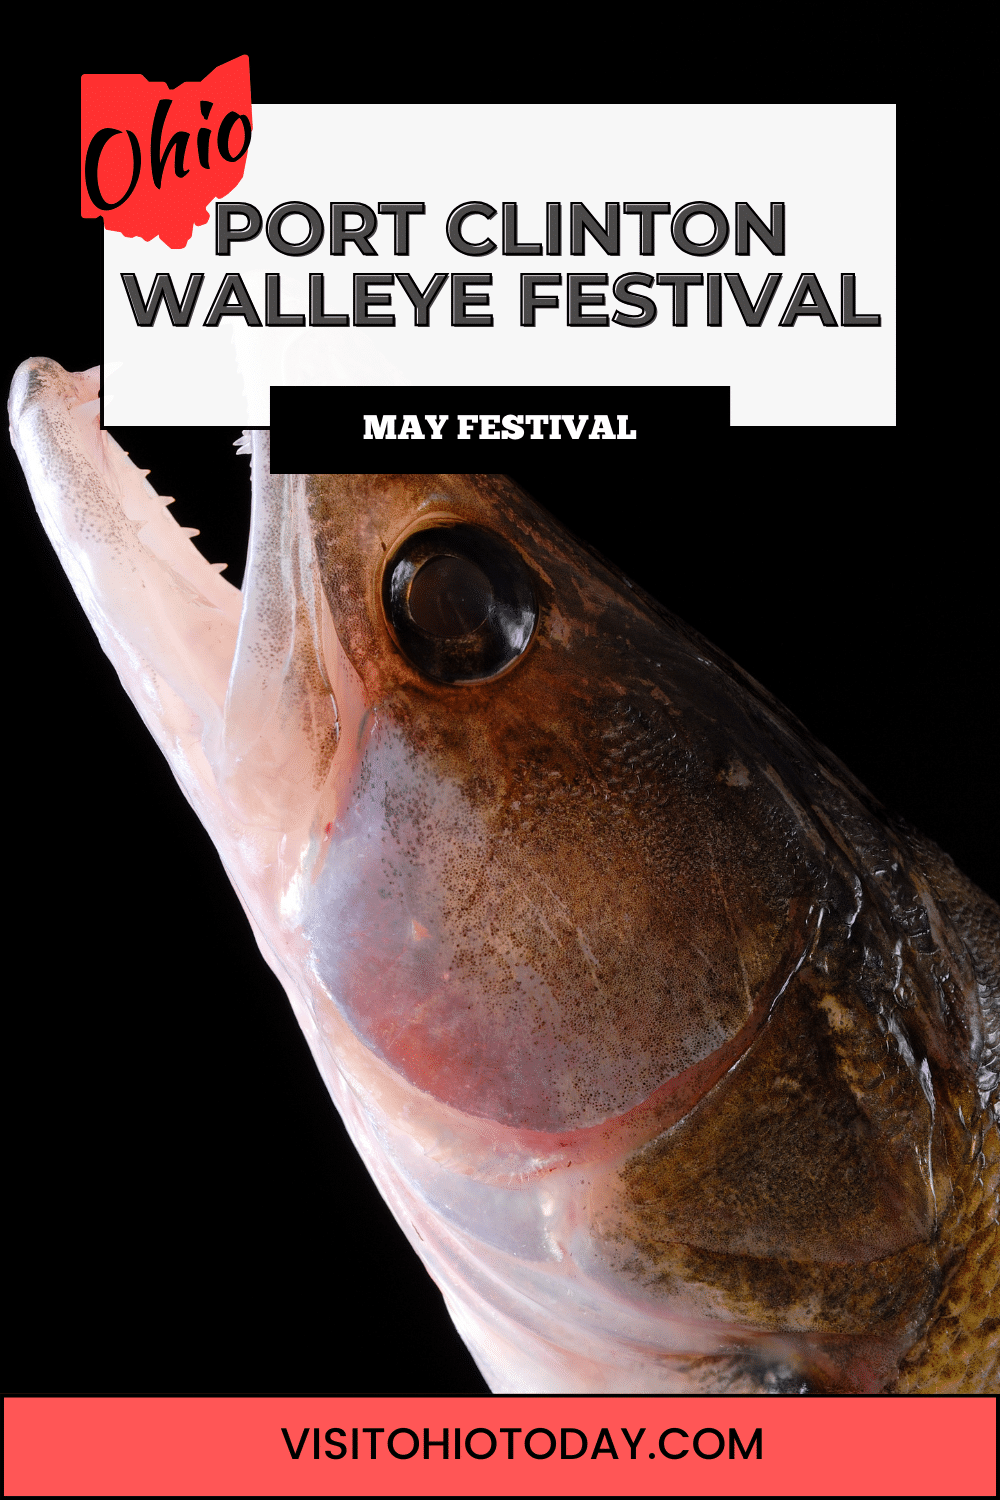 Port Clinton Walleye Festival will return on Memorial Day weekend at Waterworks Park in Port Clinton.